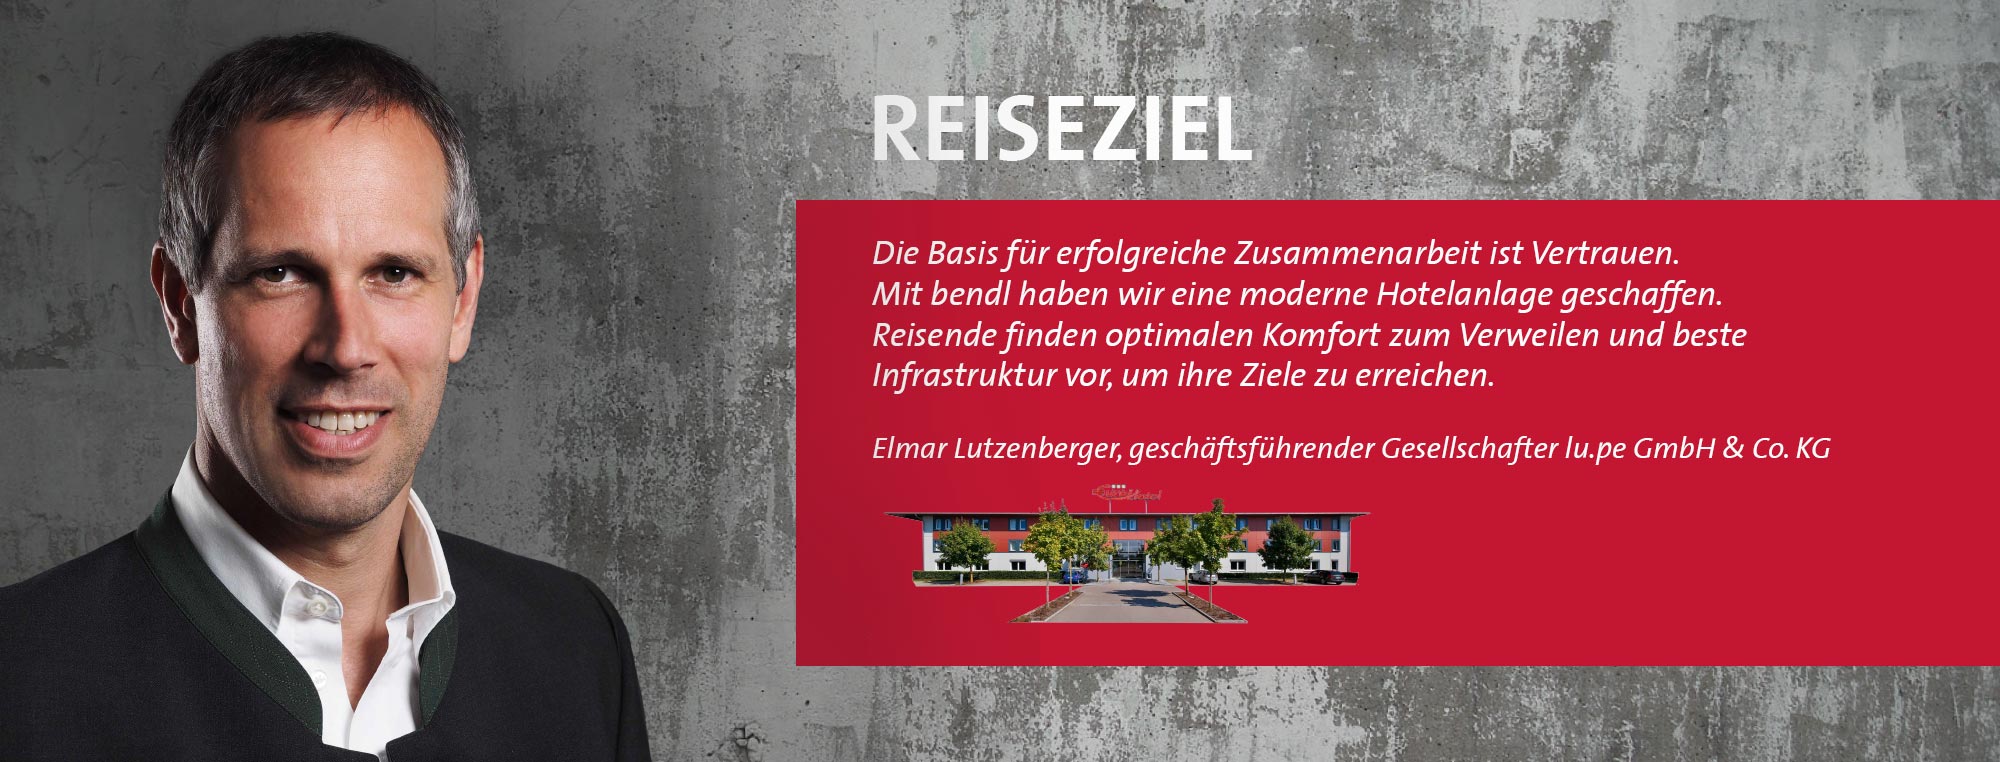 Elmar Lutzenberger - lu.pe GmbH